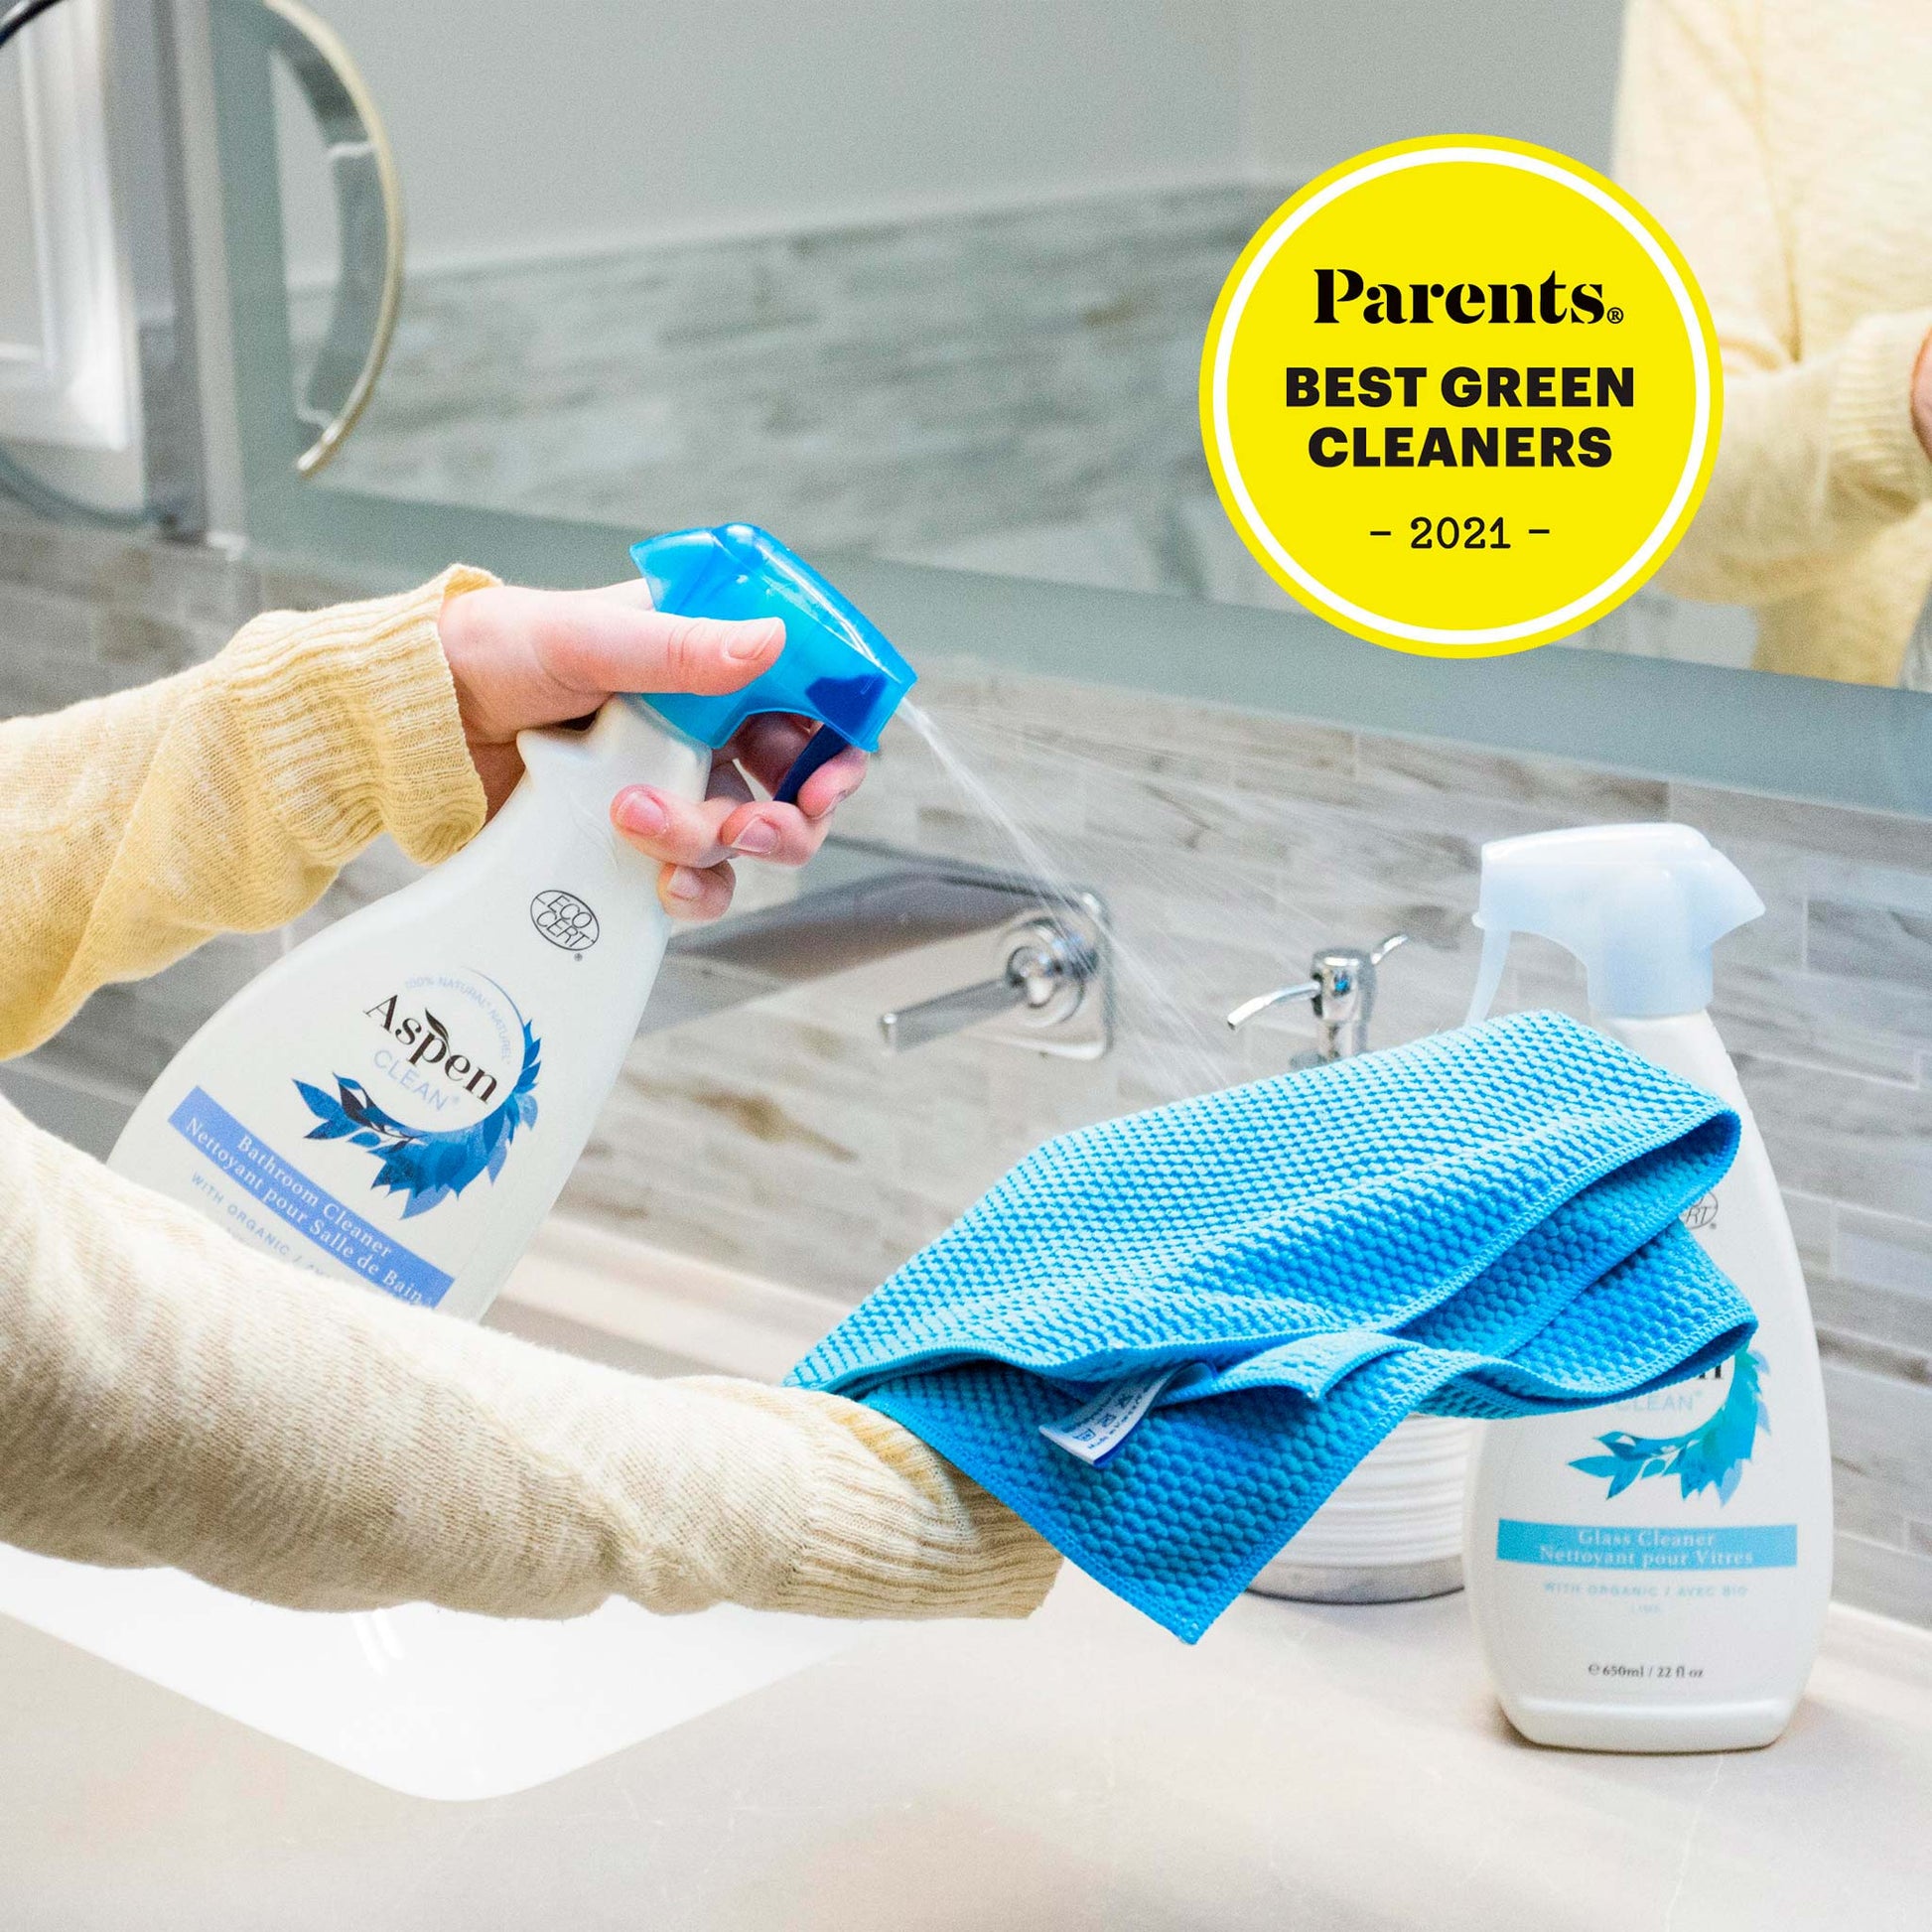 A woman using AspenClean Best Bathroom Cleaner to clean a bathroom countertop